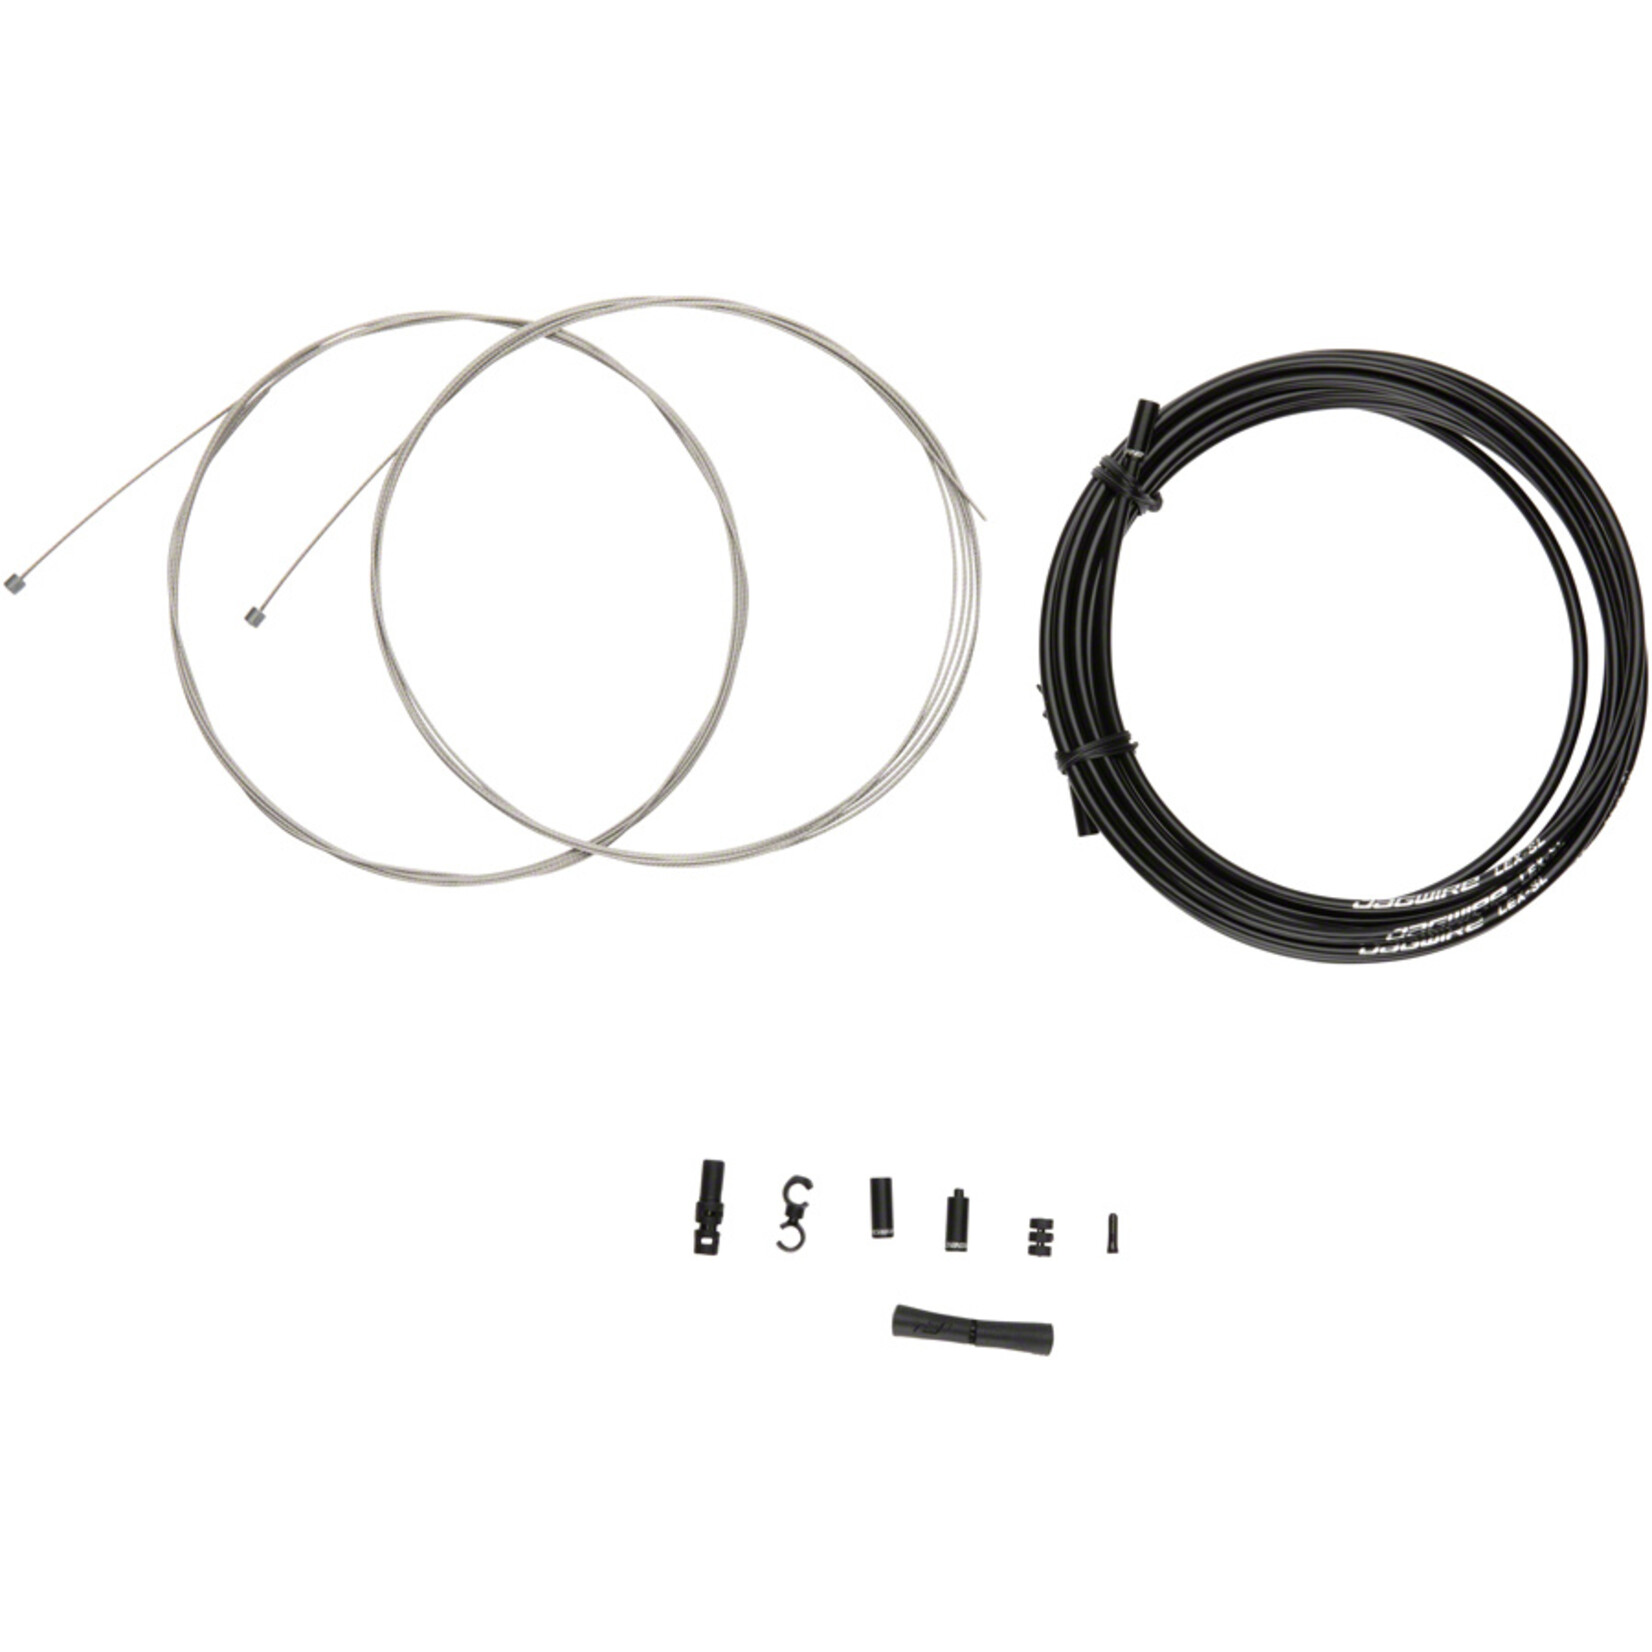 Jagwire Jagwire Sport XL Shift Cable Kit SRAM/Shimano, Black